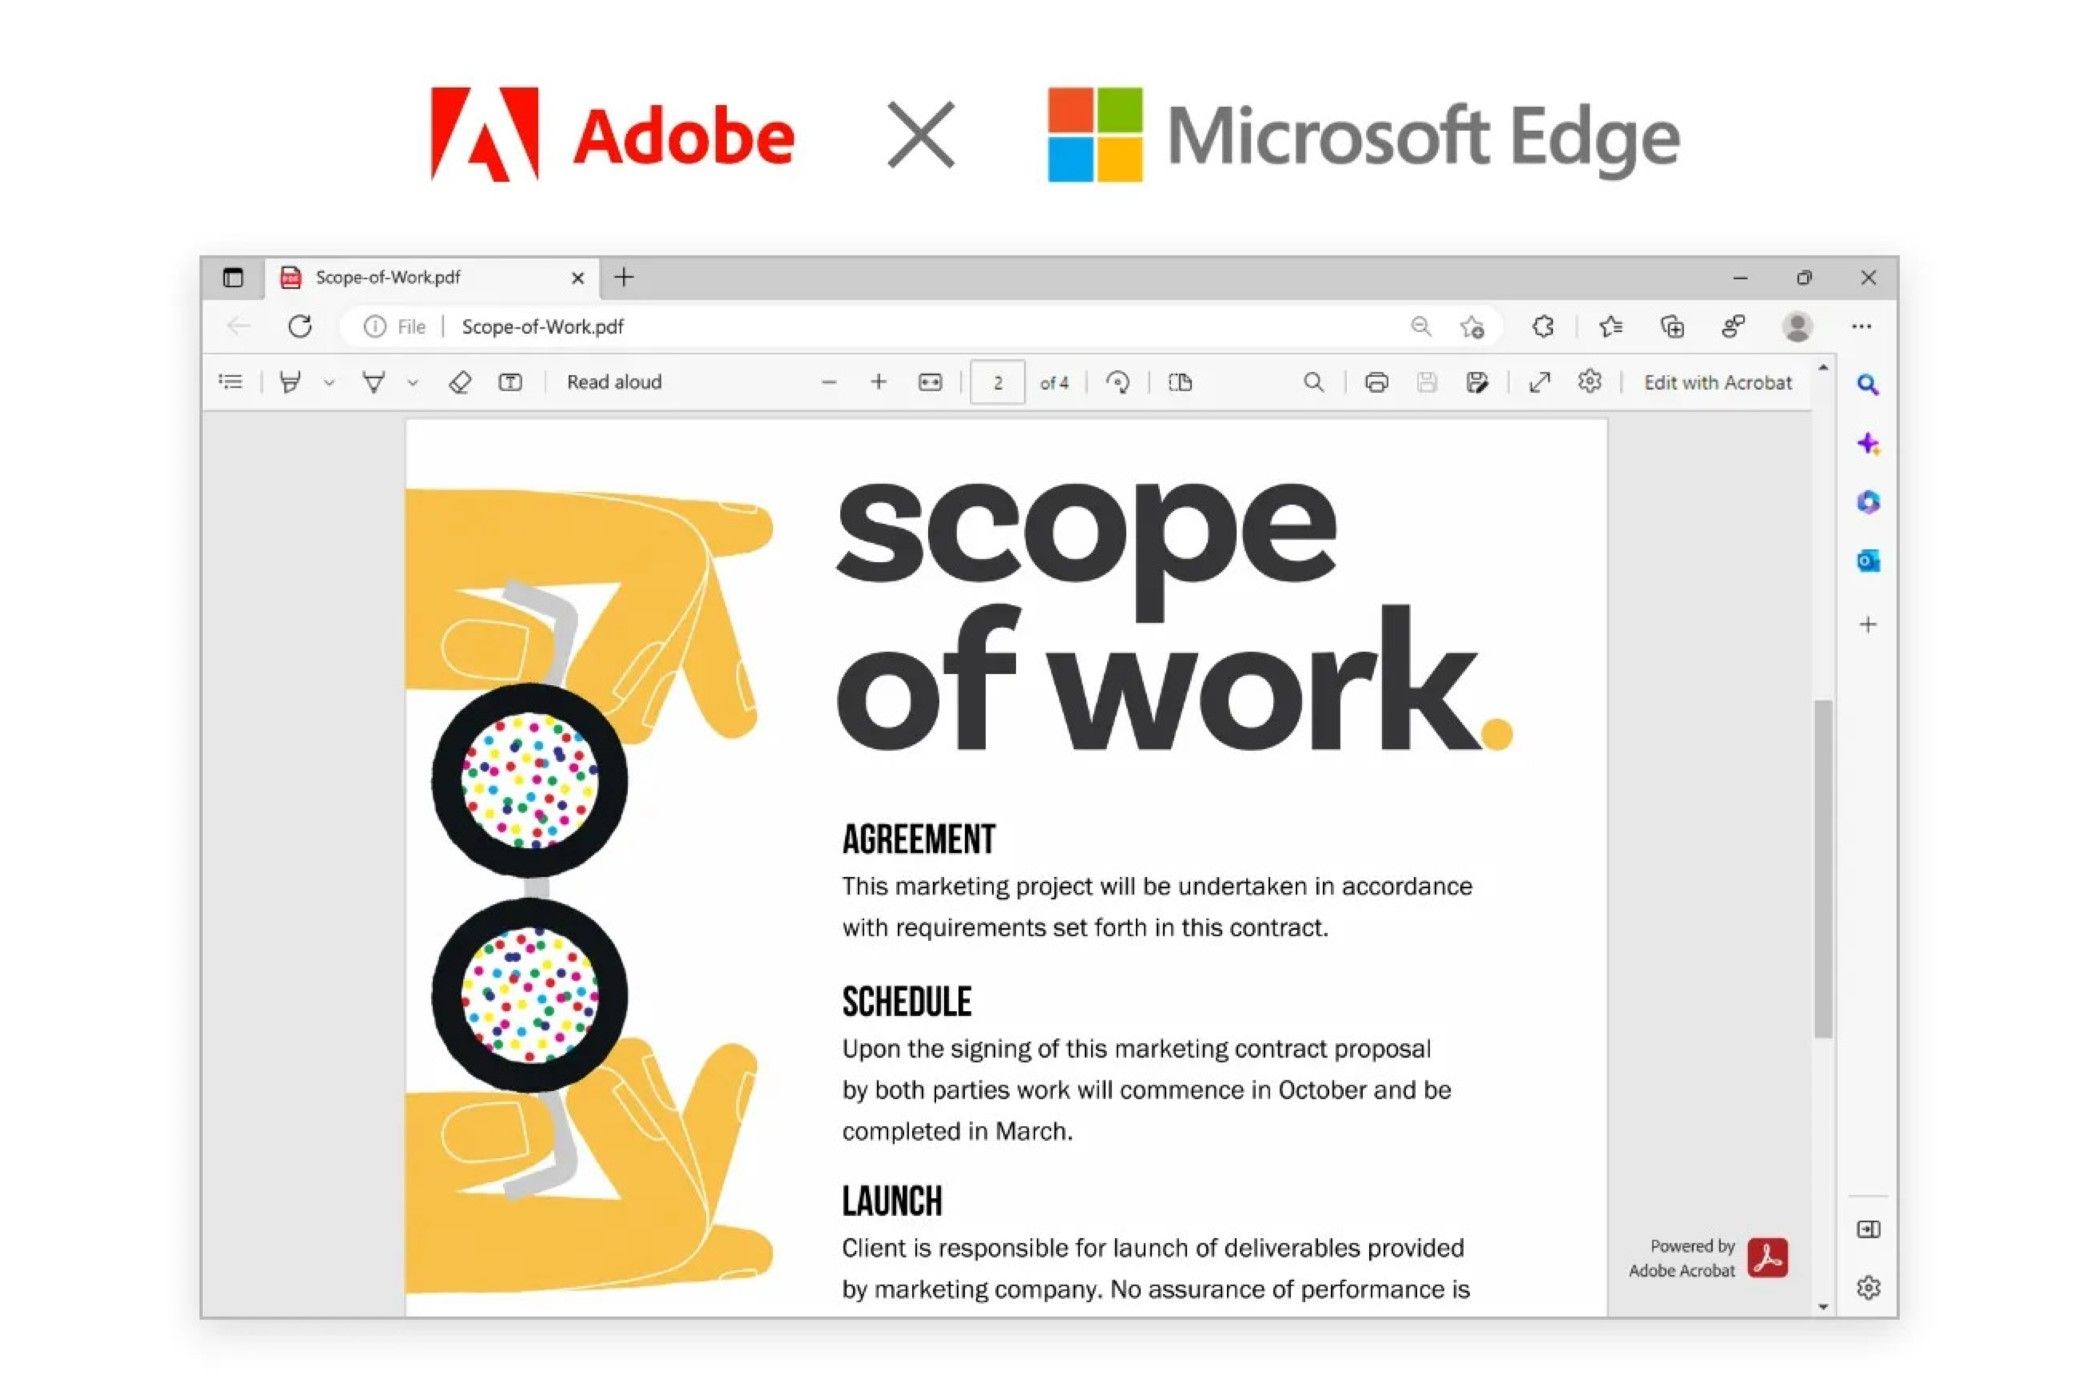 Enable Adobe Acrobat extension for Microsoft Edge